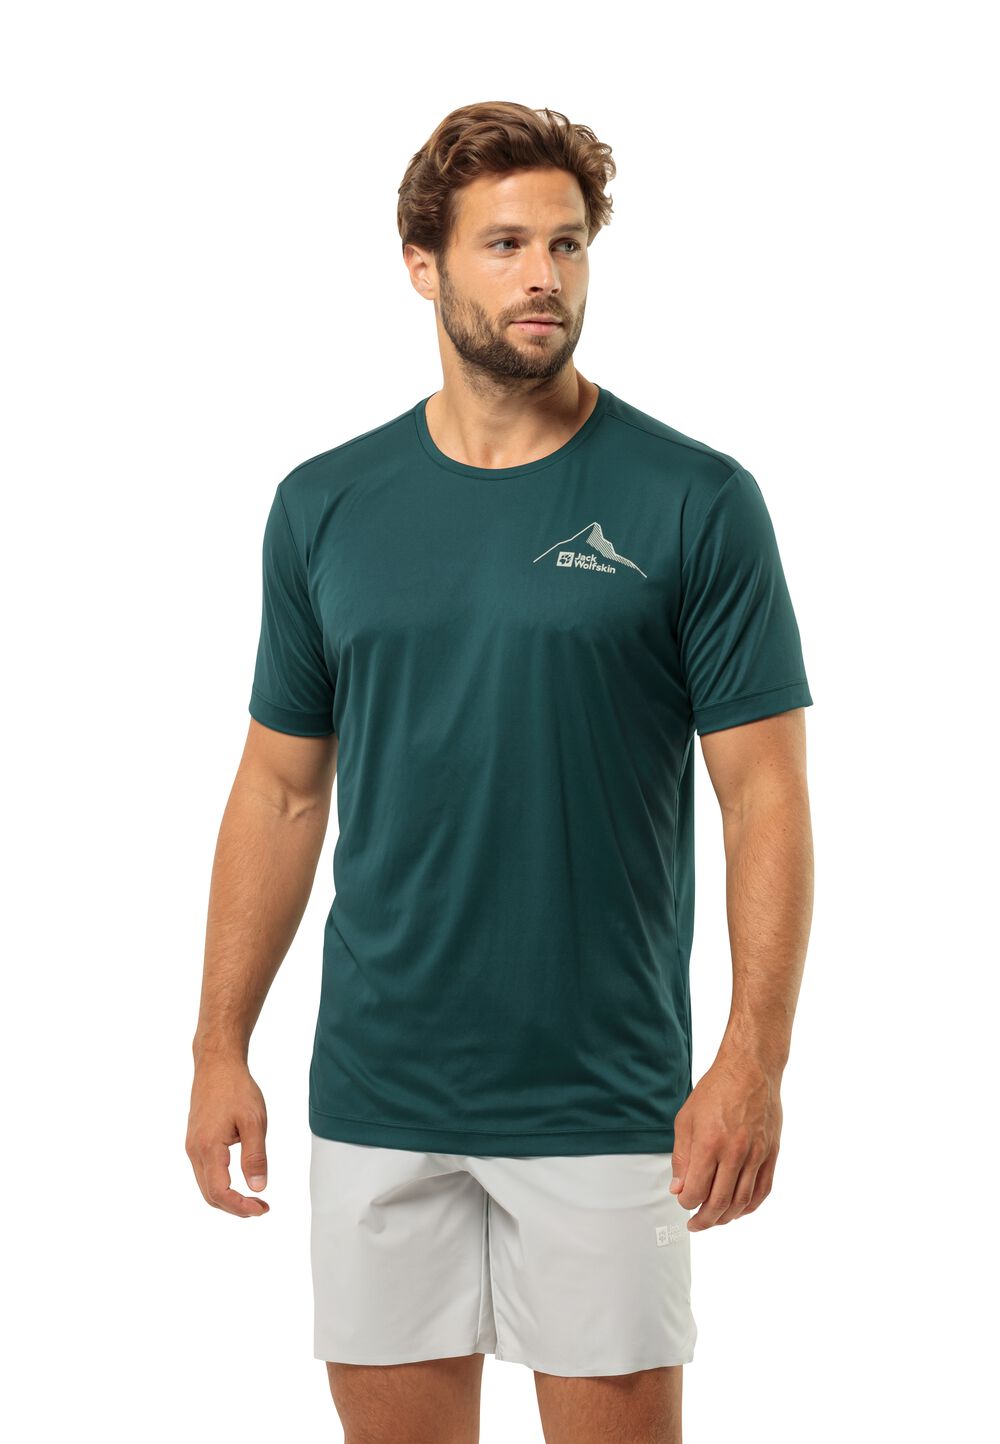 Jack Wolfskin Peak Graphic T-Shirt Men Functioneel shirt Heren S emerald